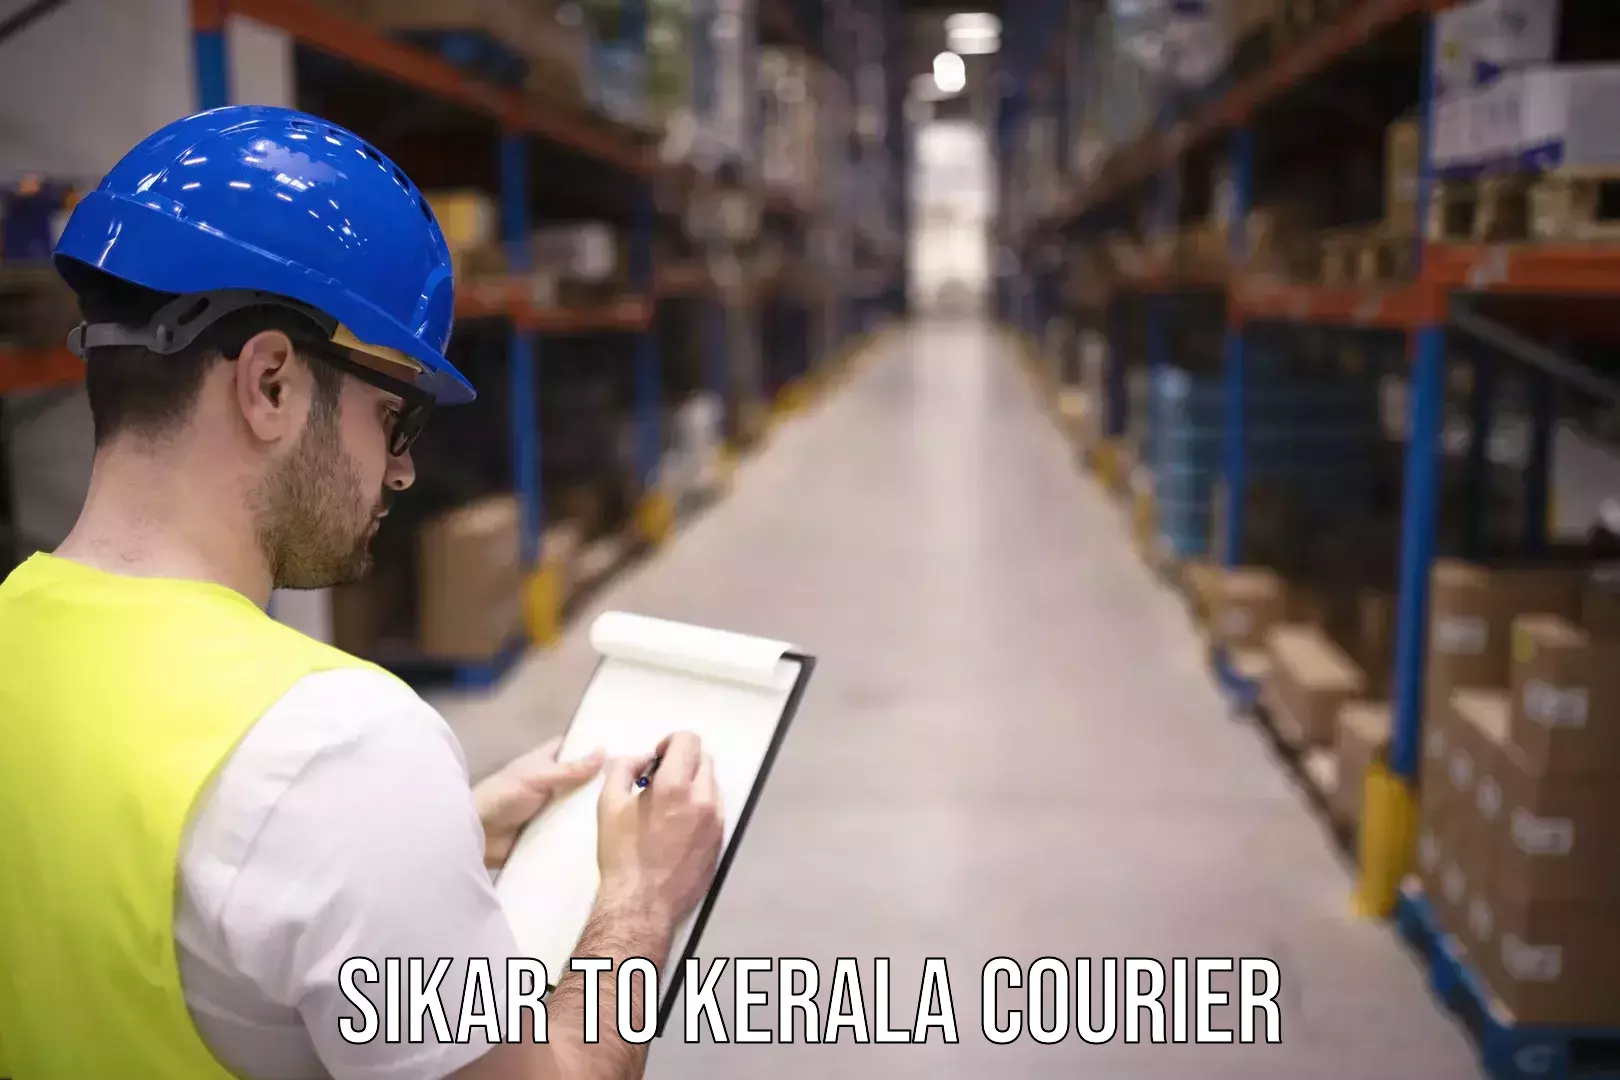 Digital courier platforms Sikar to Nedumkandam